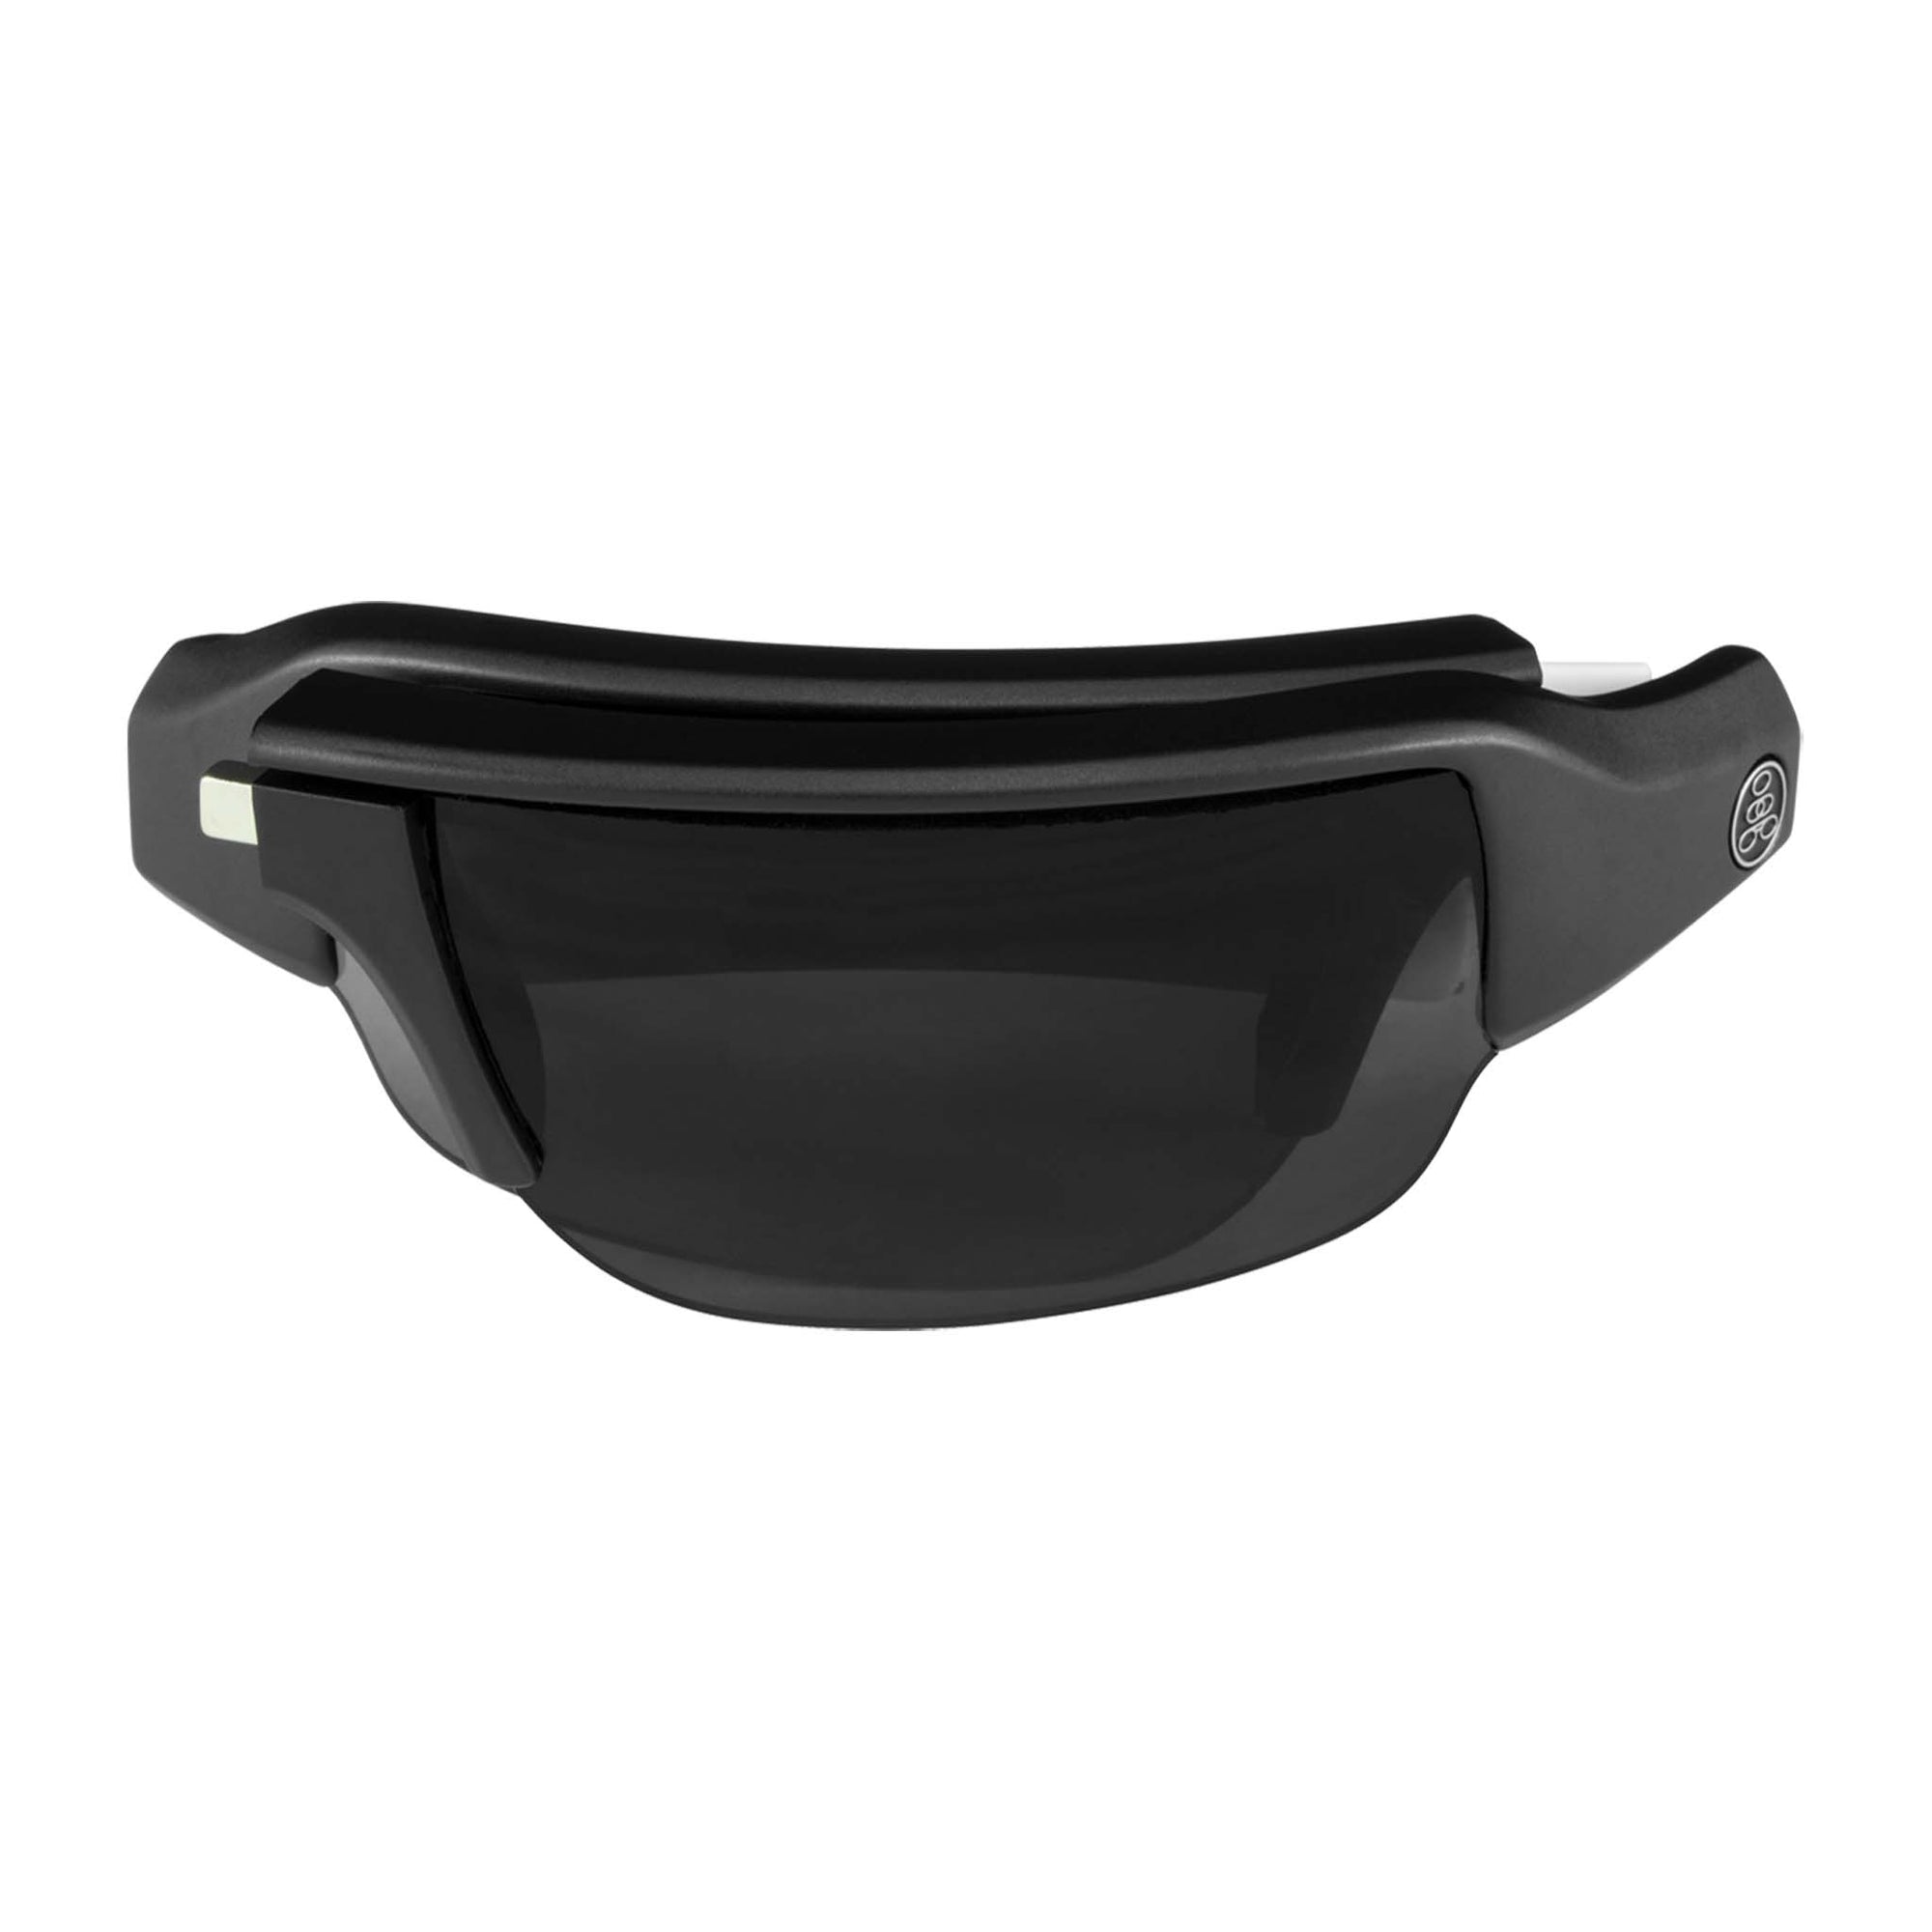 Popticals, Premium Compact Sunglasses, PopGun, 010010-WMGP, Polarized Sunglasses, Matte Black/White Frame, Gray Lenses, Compact View